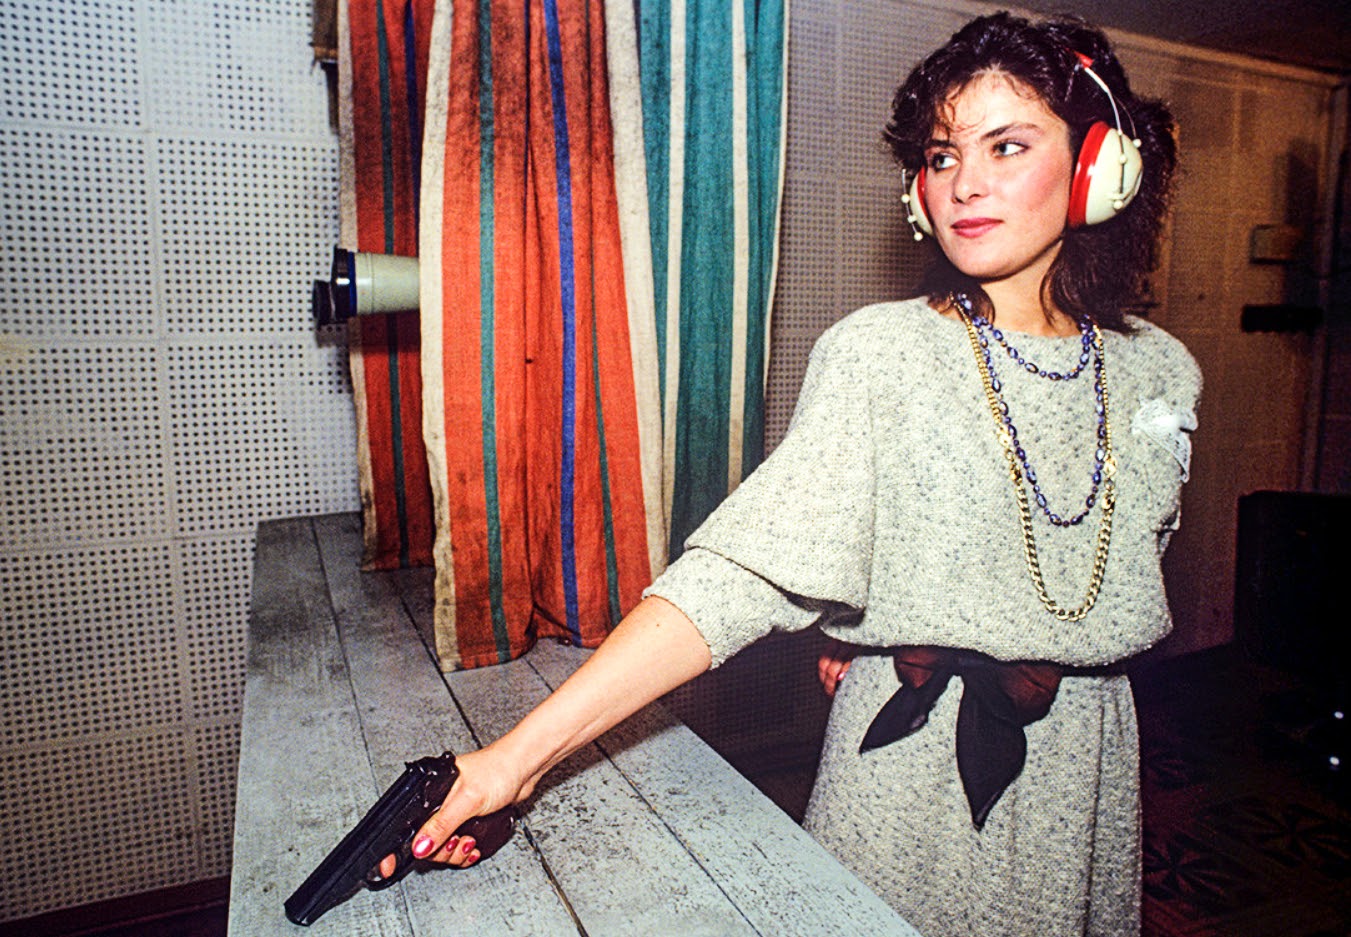 Miss KGB 1990, Katya Mayorova practices with a gun